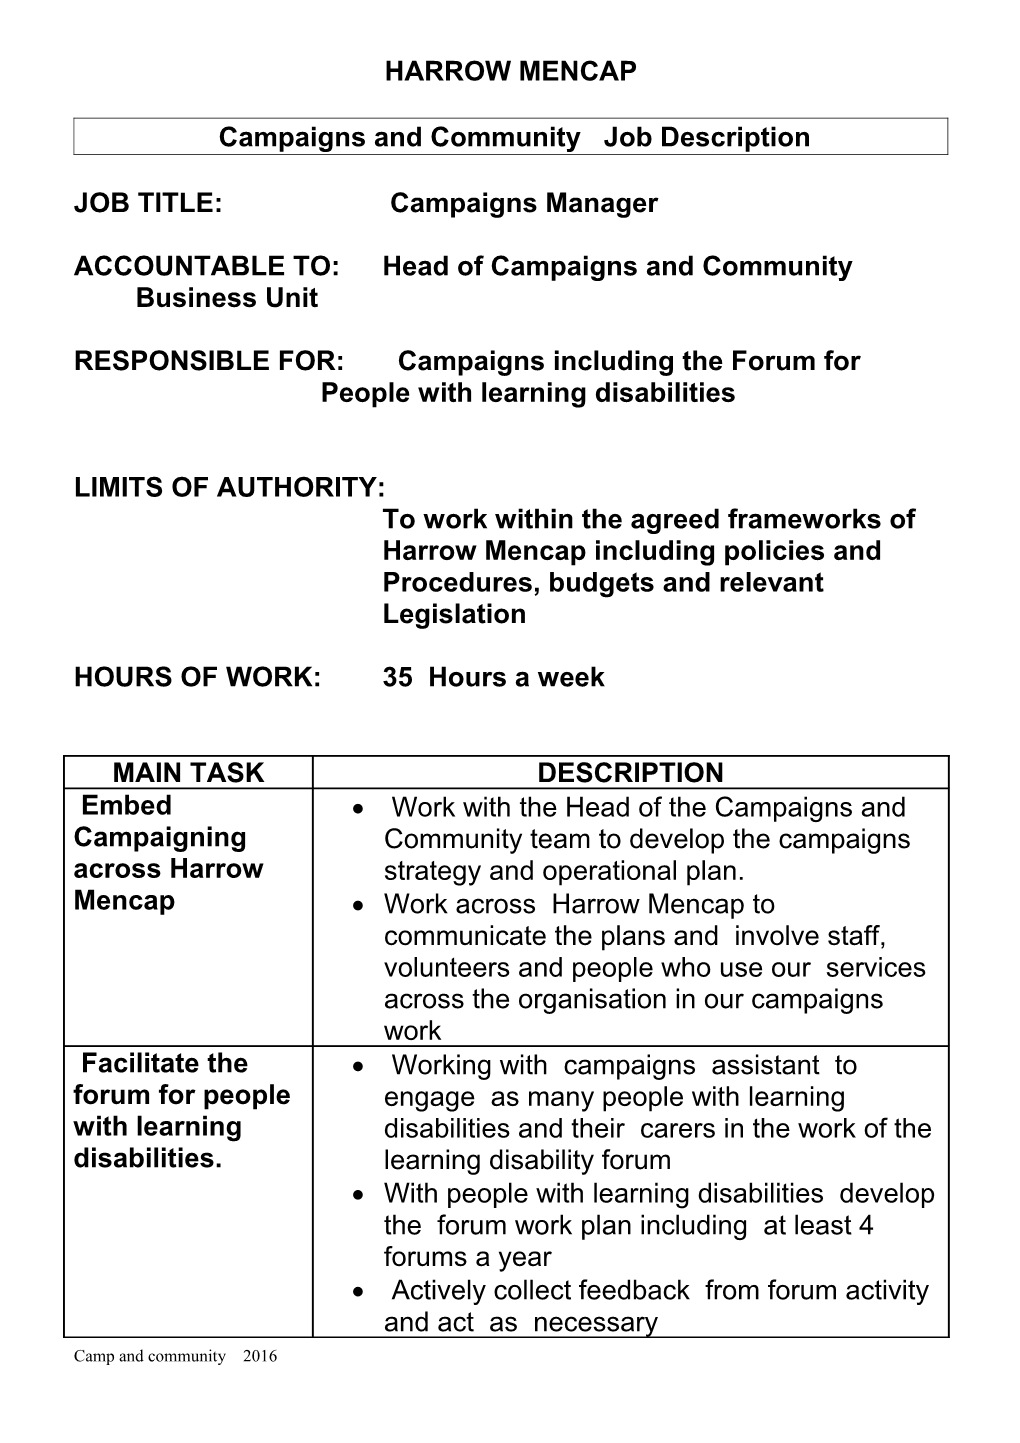 Campaigns and Community Job Description